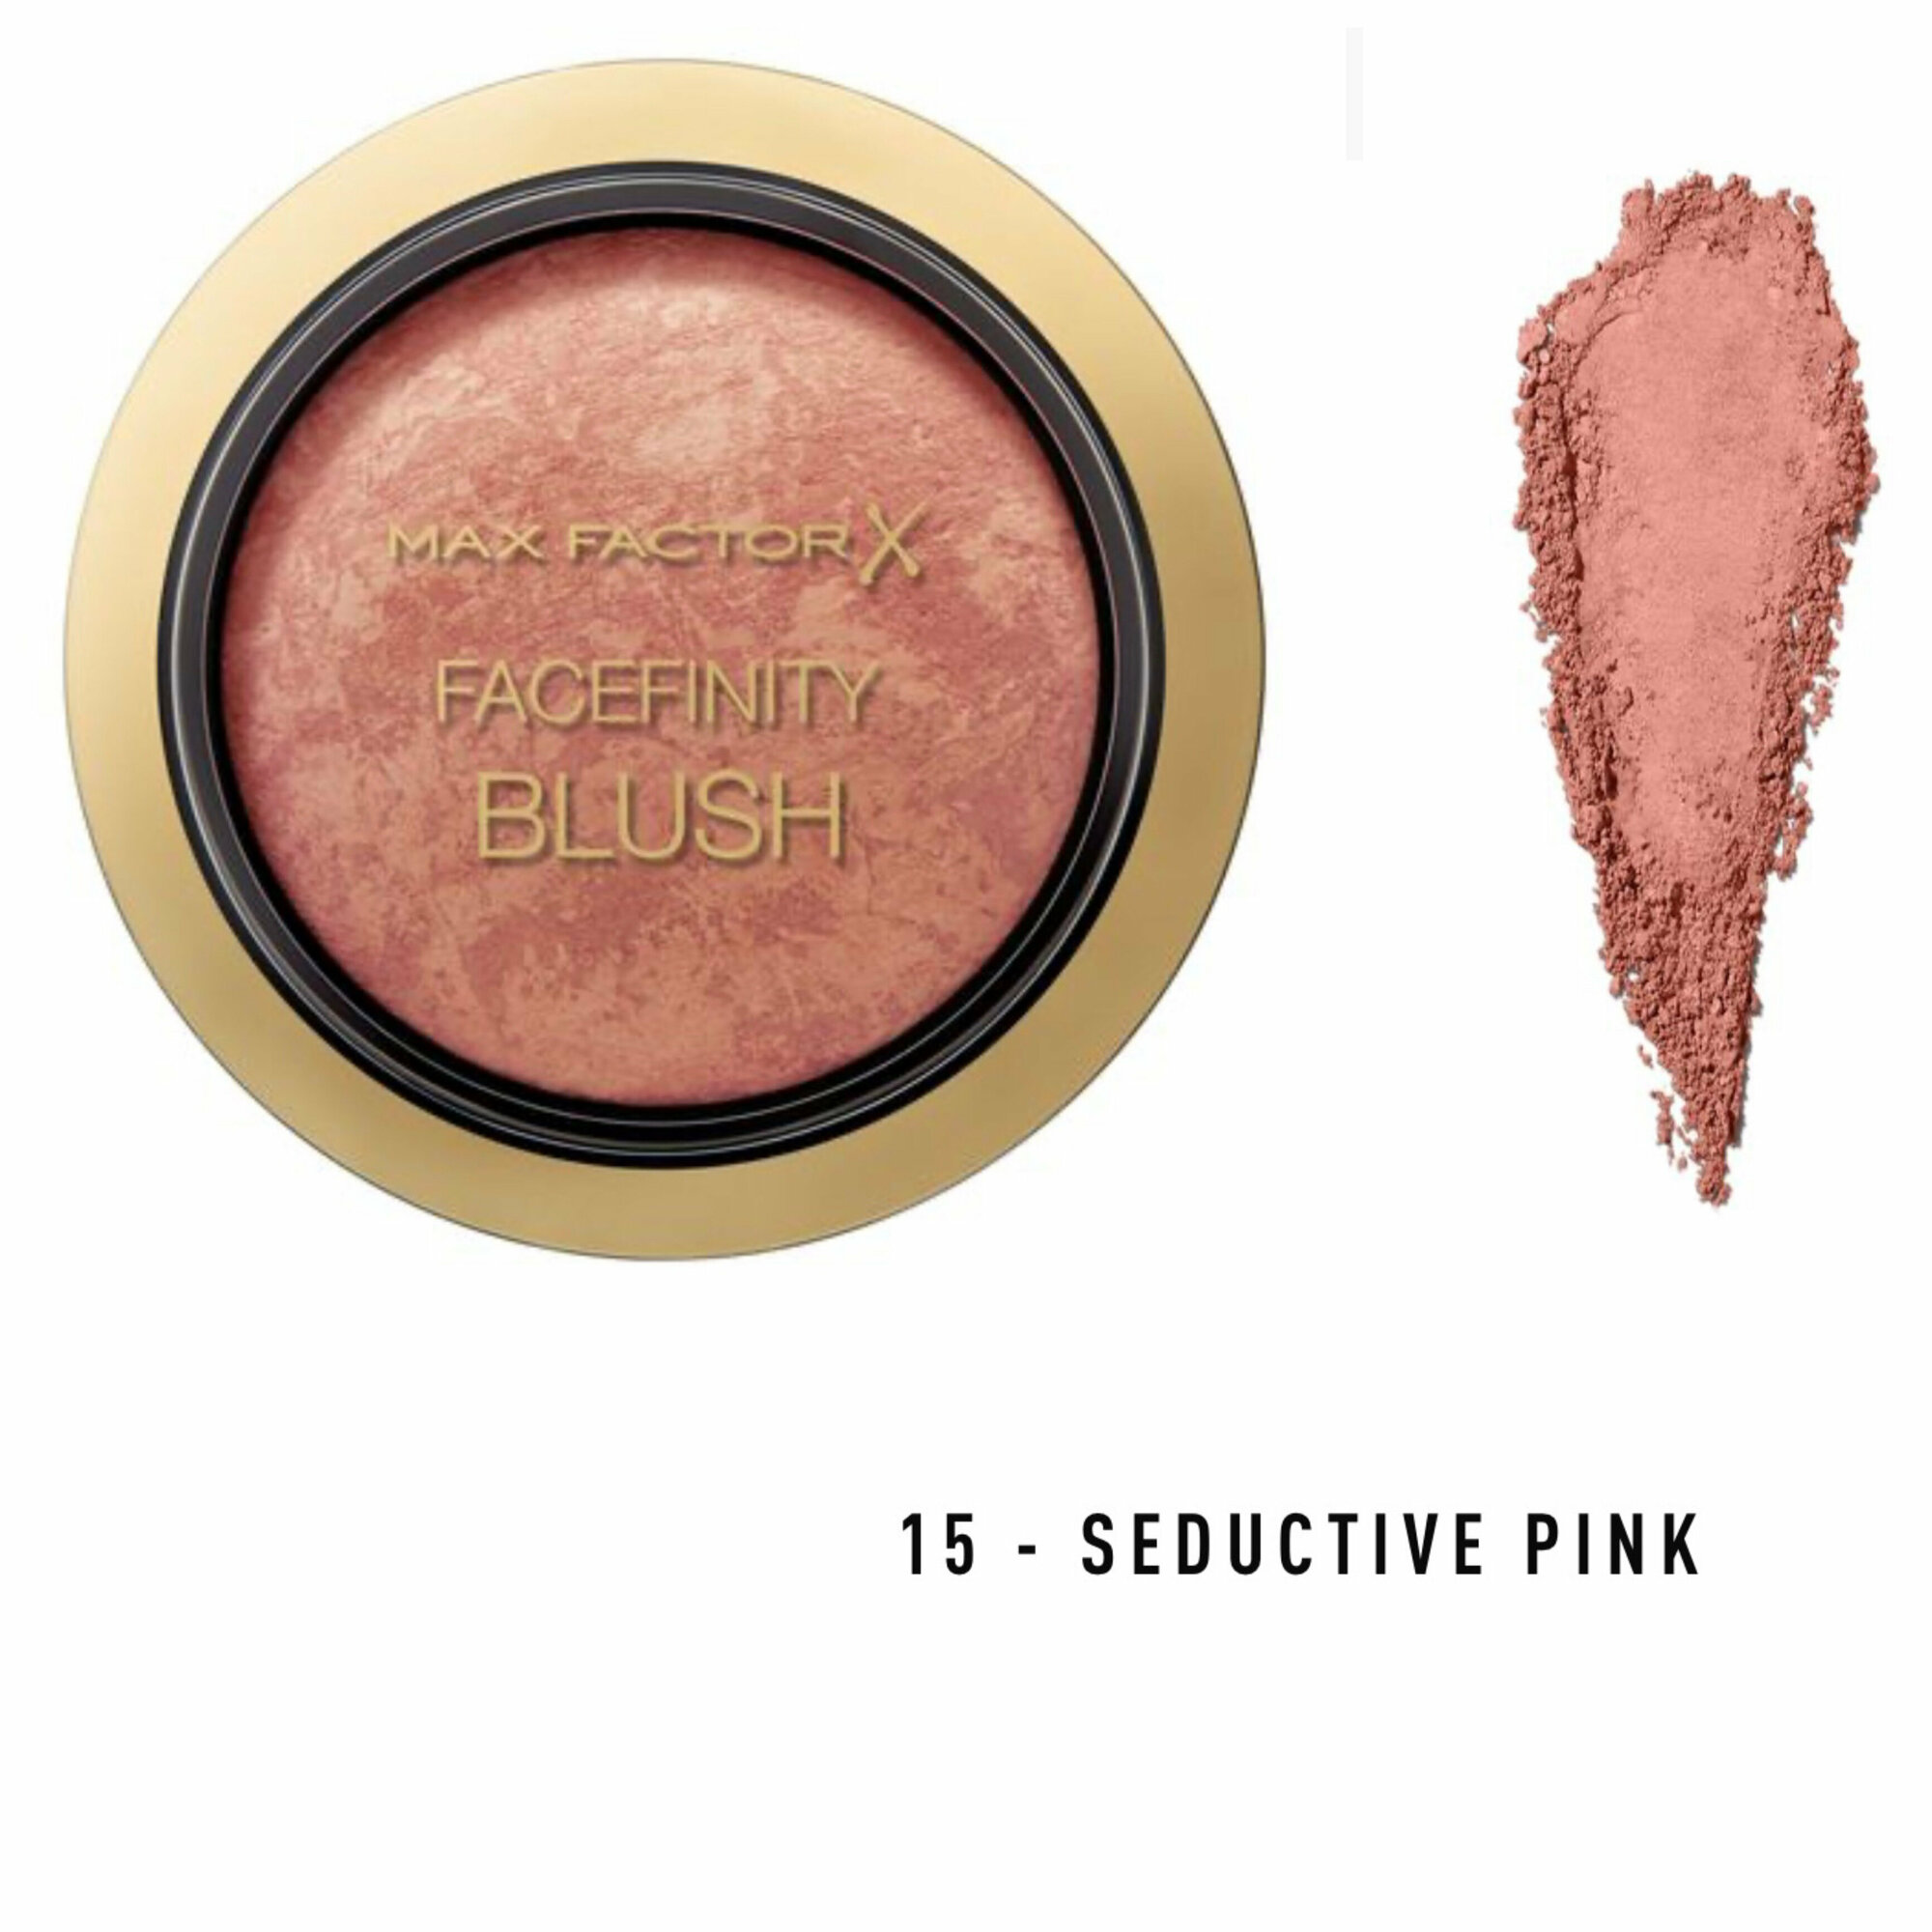 Max Factor Румяна Creme puff blush, 15 seductive pink